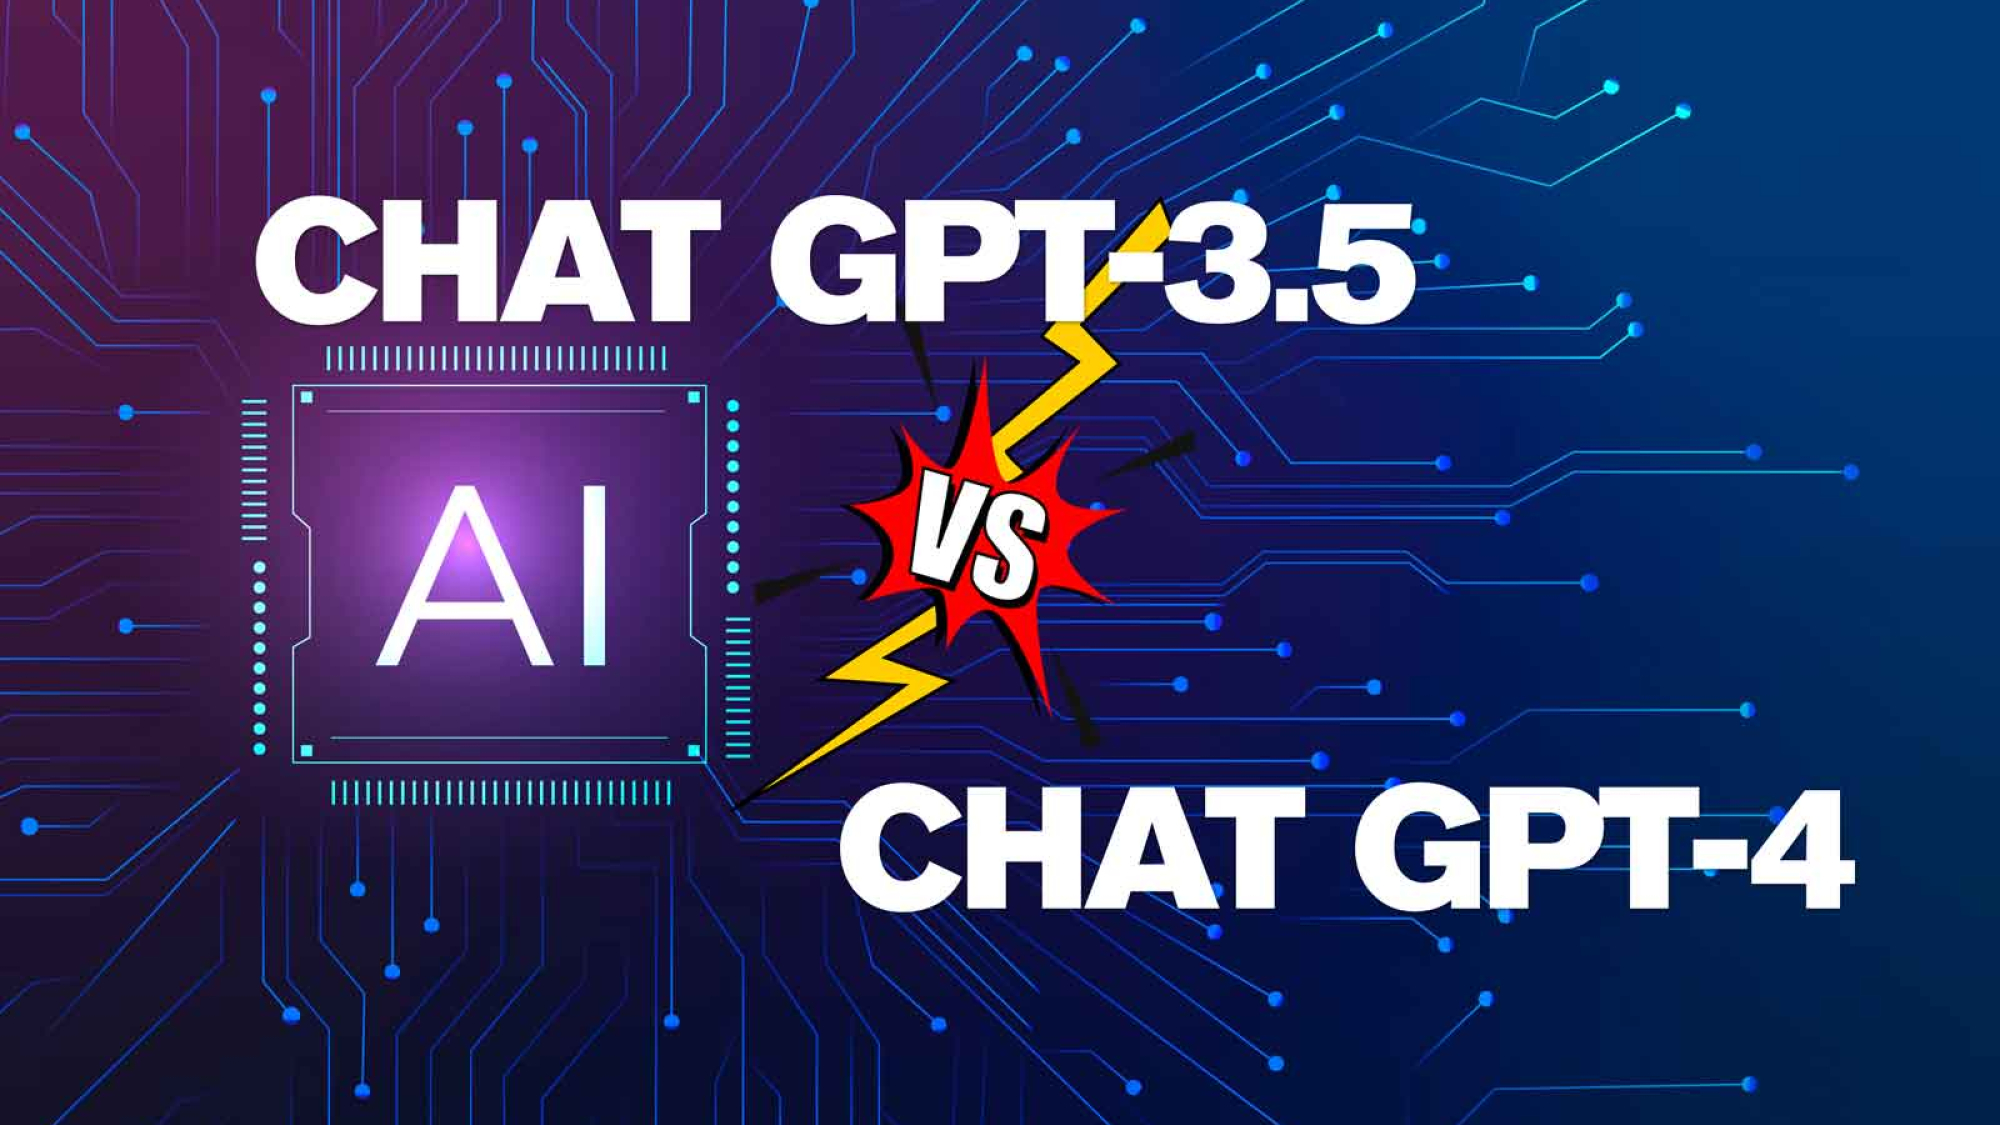 Chat GPT3.5 vs CHAT GPT-4